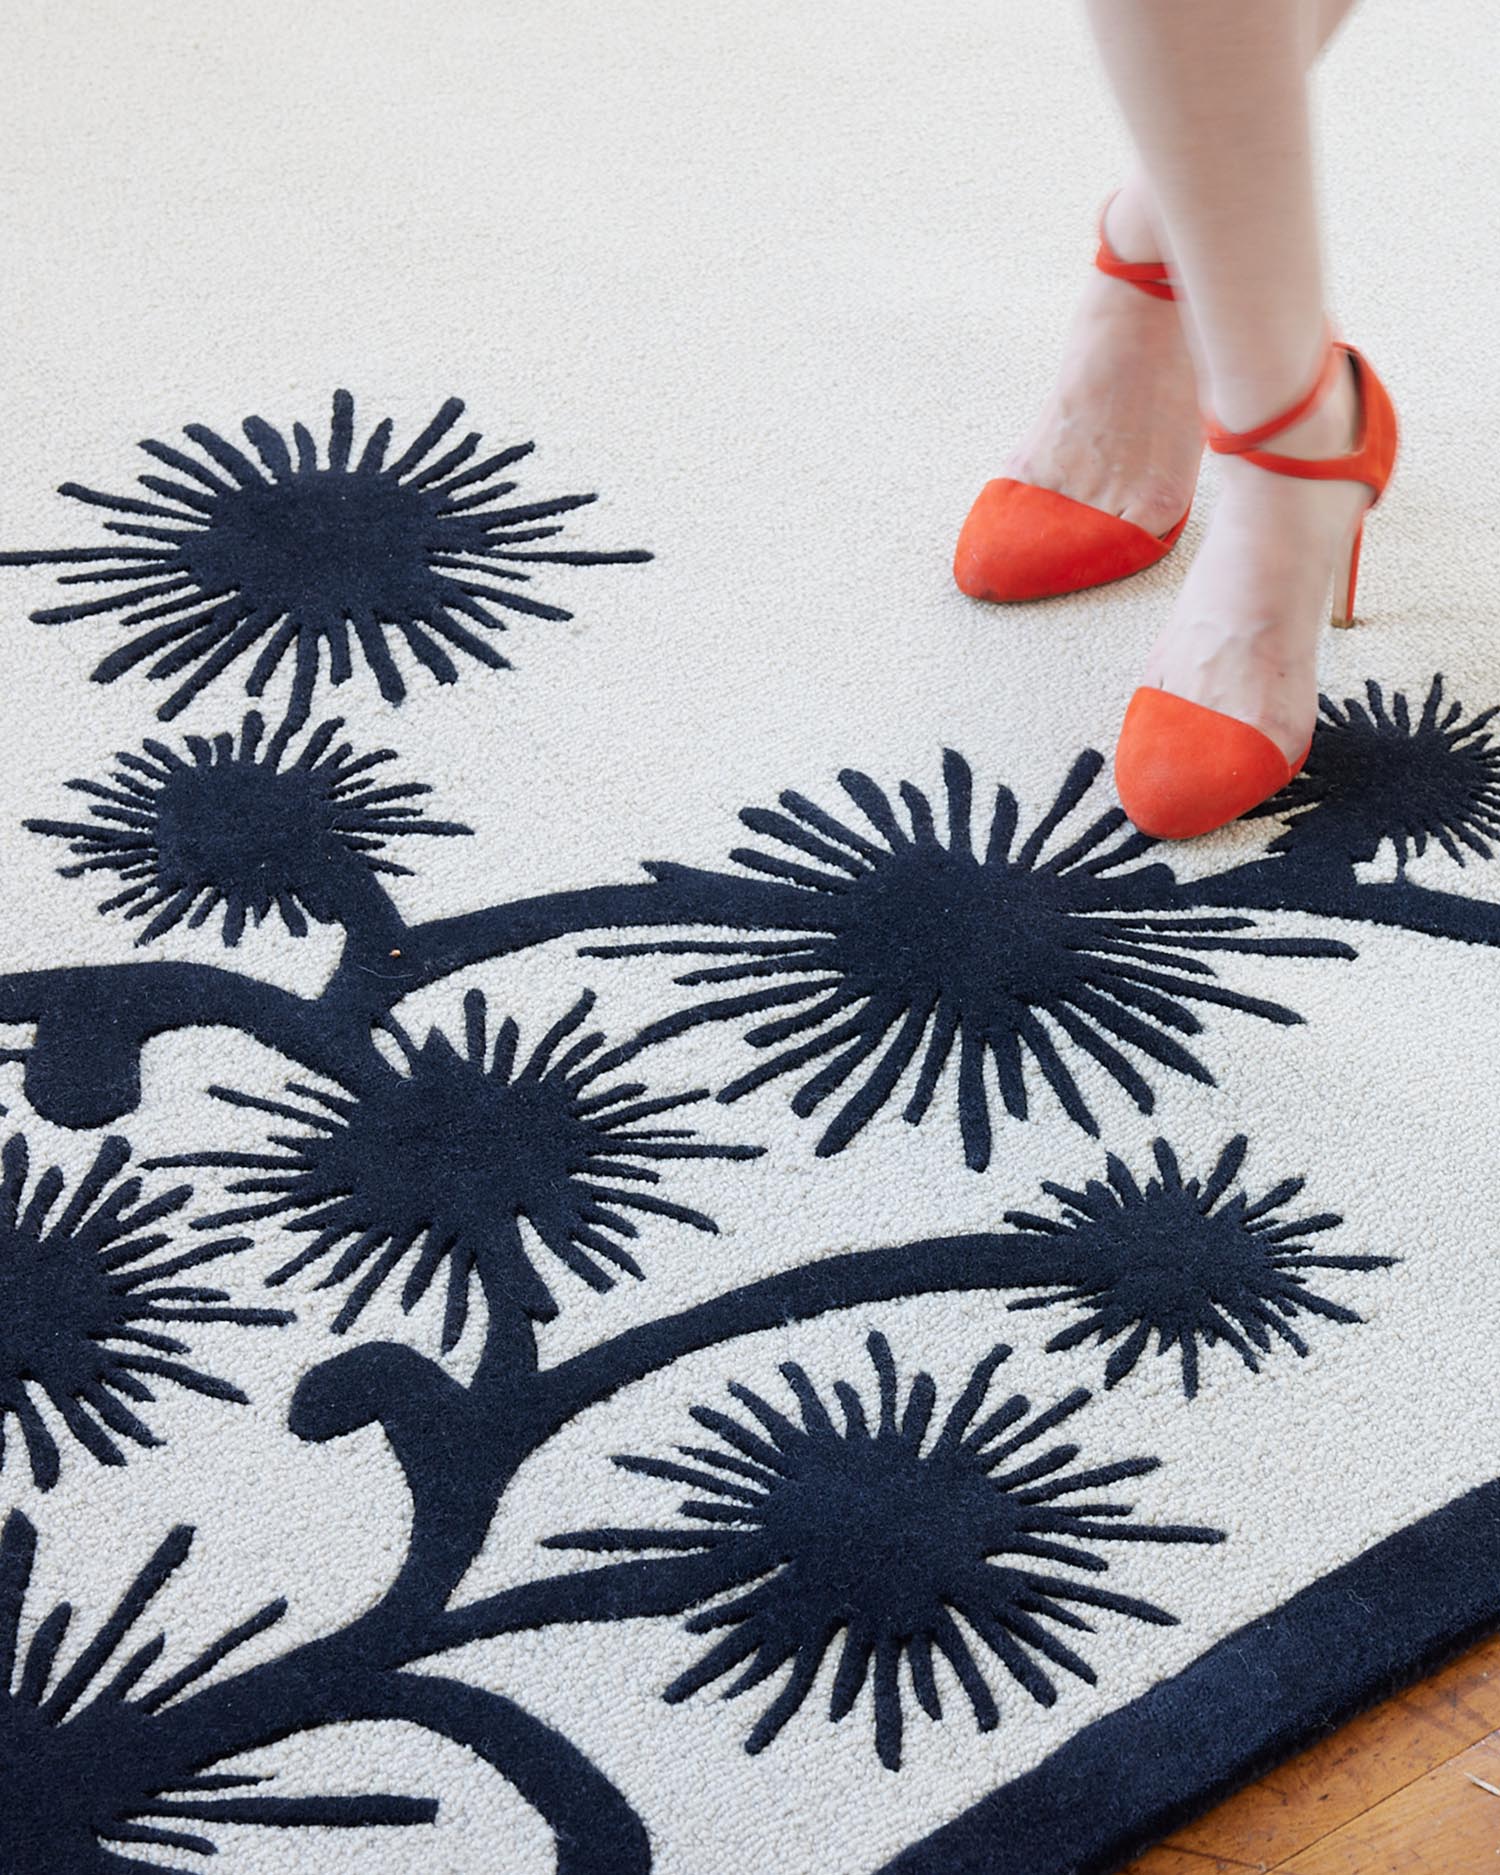 angela adams Pine Tree Snow rug contemporary modern